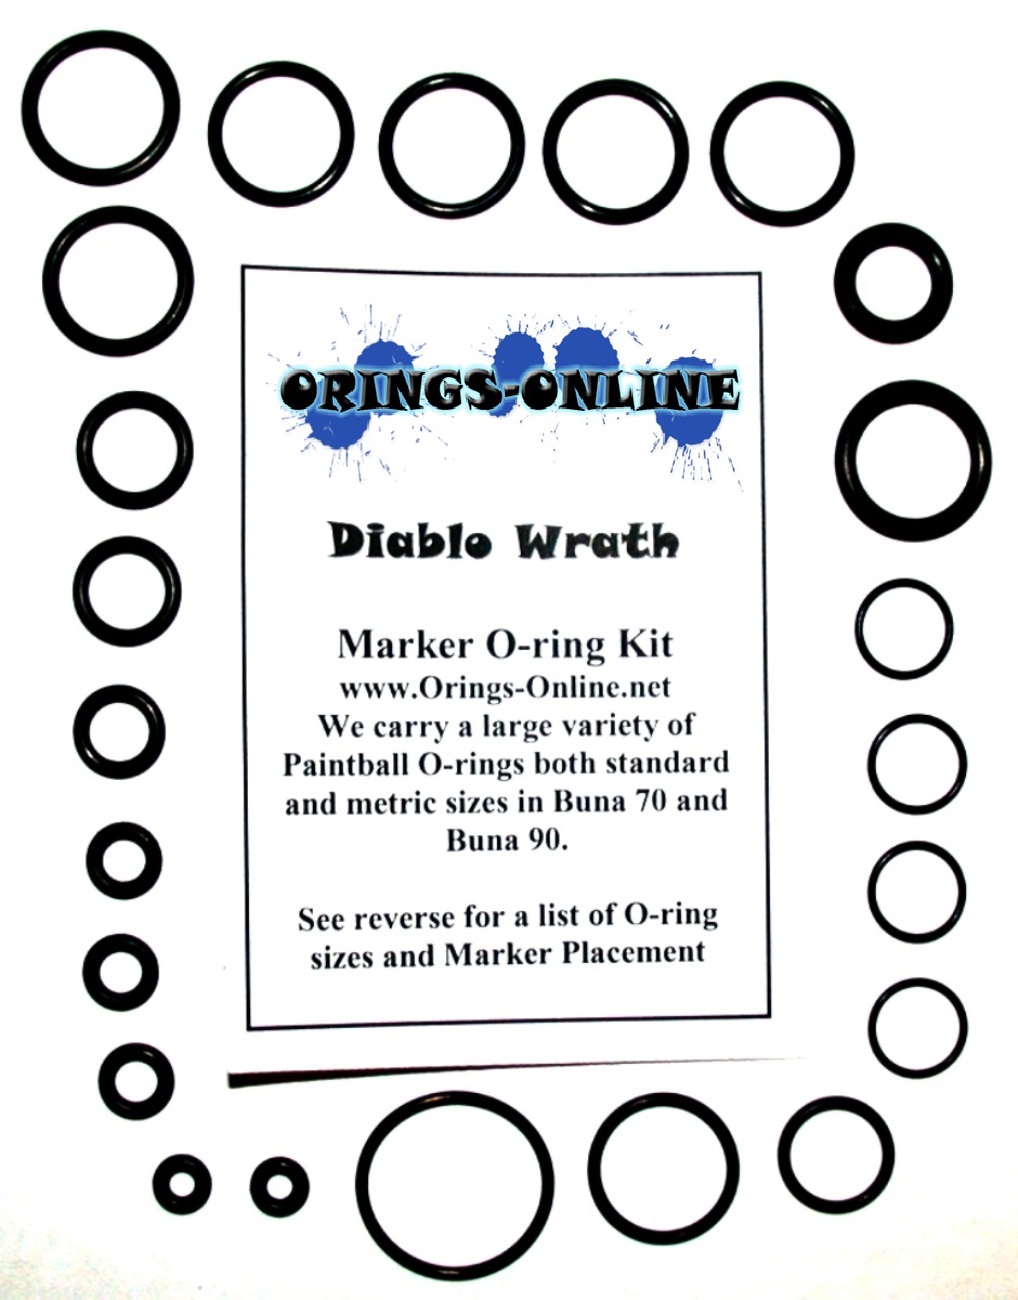 Diablo Wrath Marker O-ring Kit